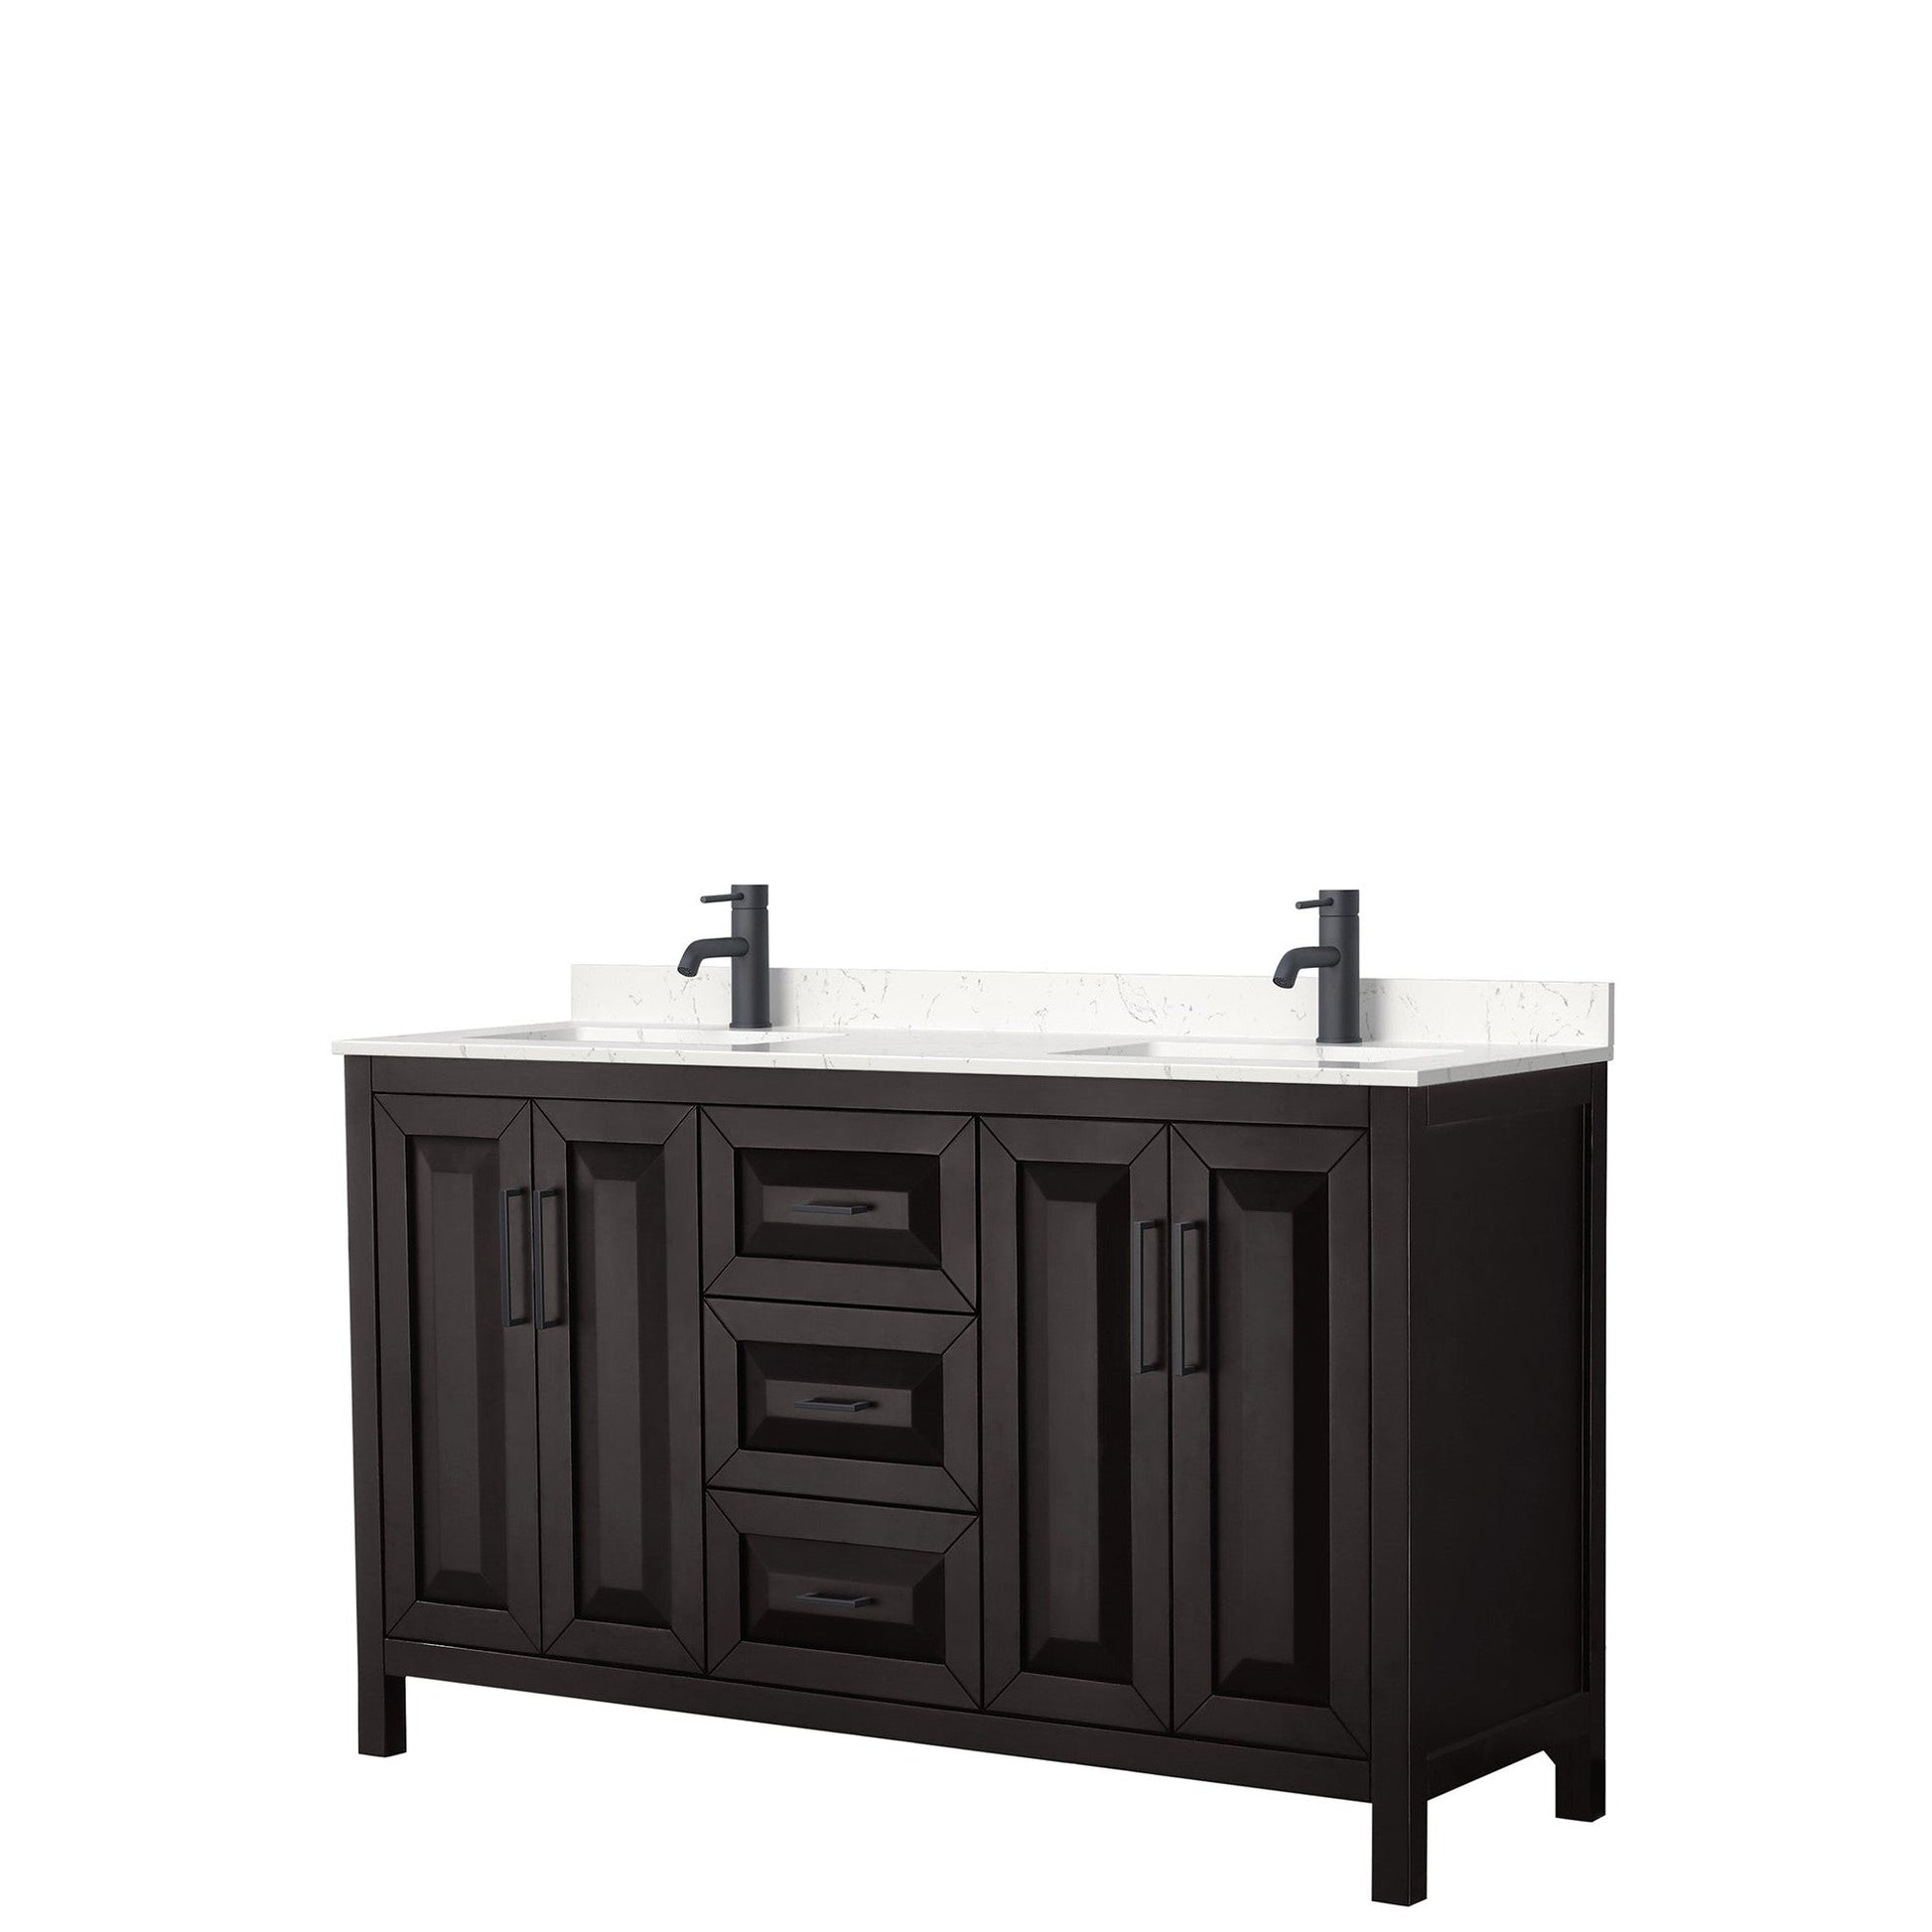 Daria 60" Double Bathroom Vanity in Dark Espresso, Carrara Cultured Marble Countertop, Undermount Square Sinks, Matte Black Trim